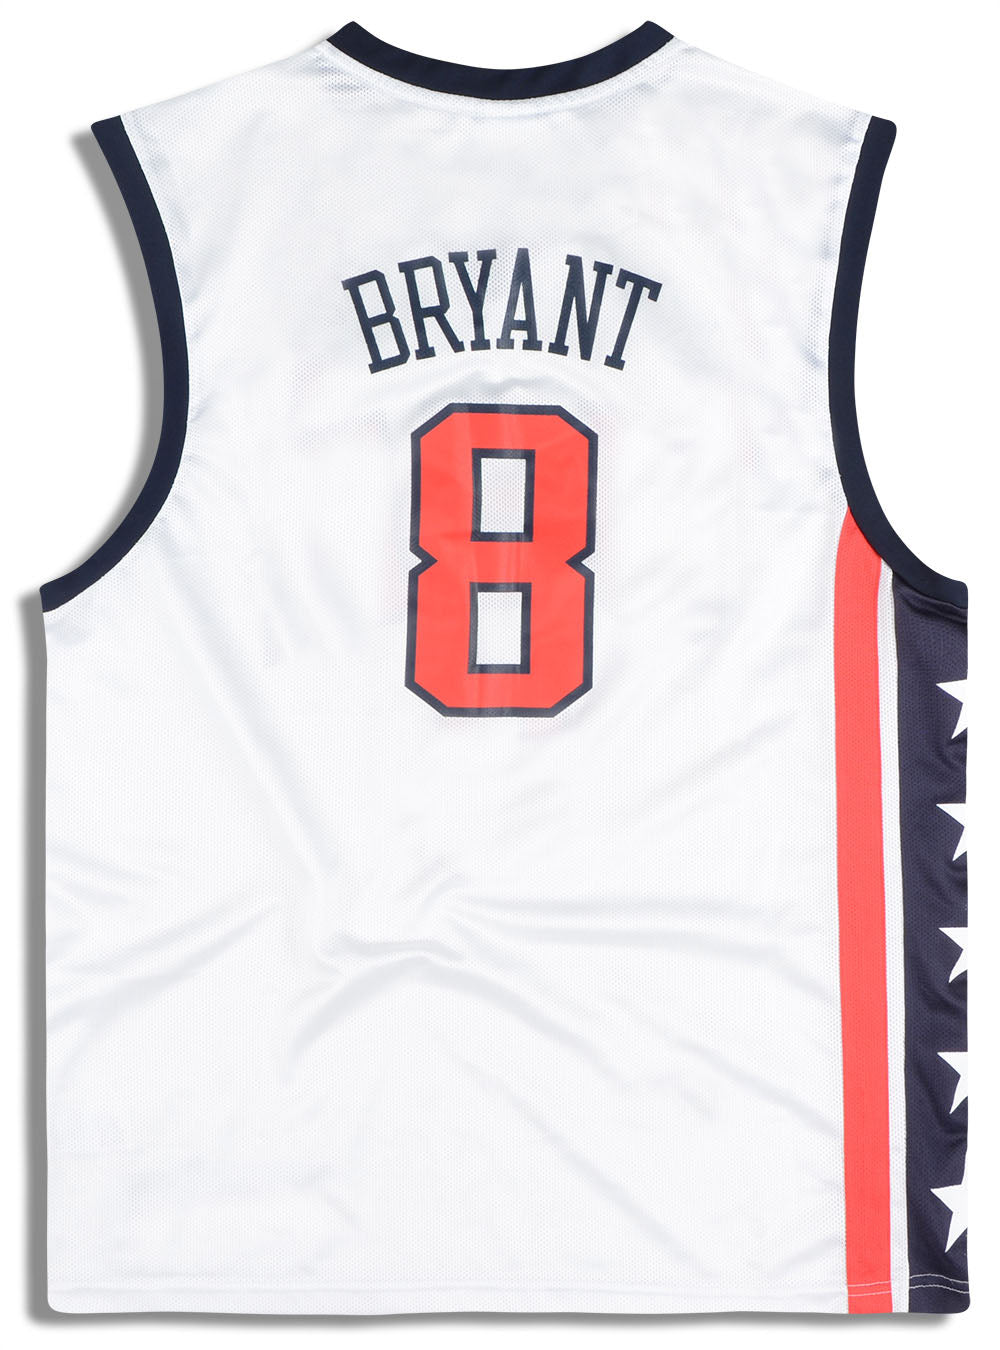 🏀 Vintage NBA Kobe Bryant Jerseys – The Throwback Store 🏀